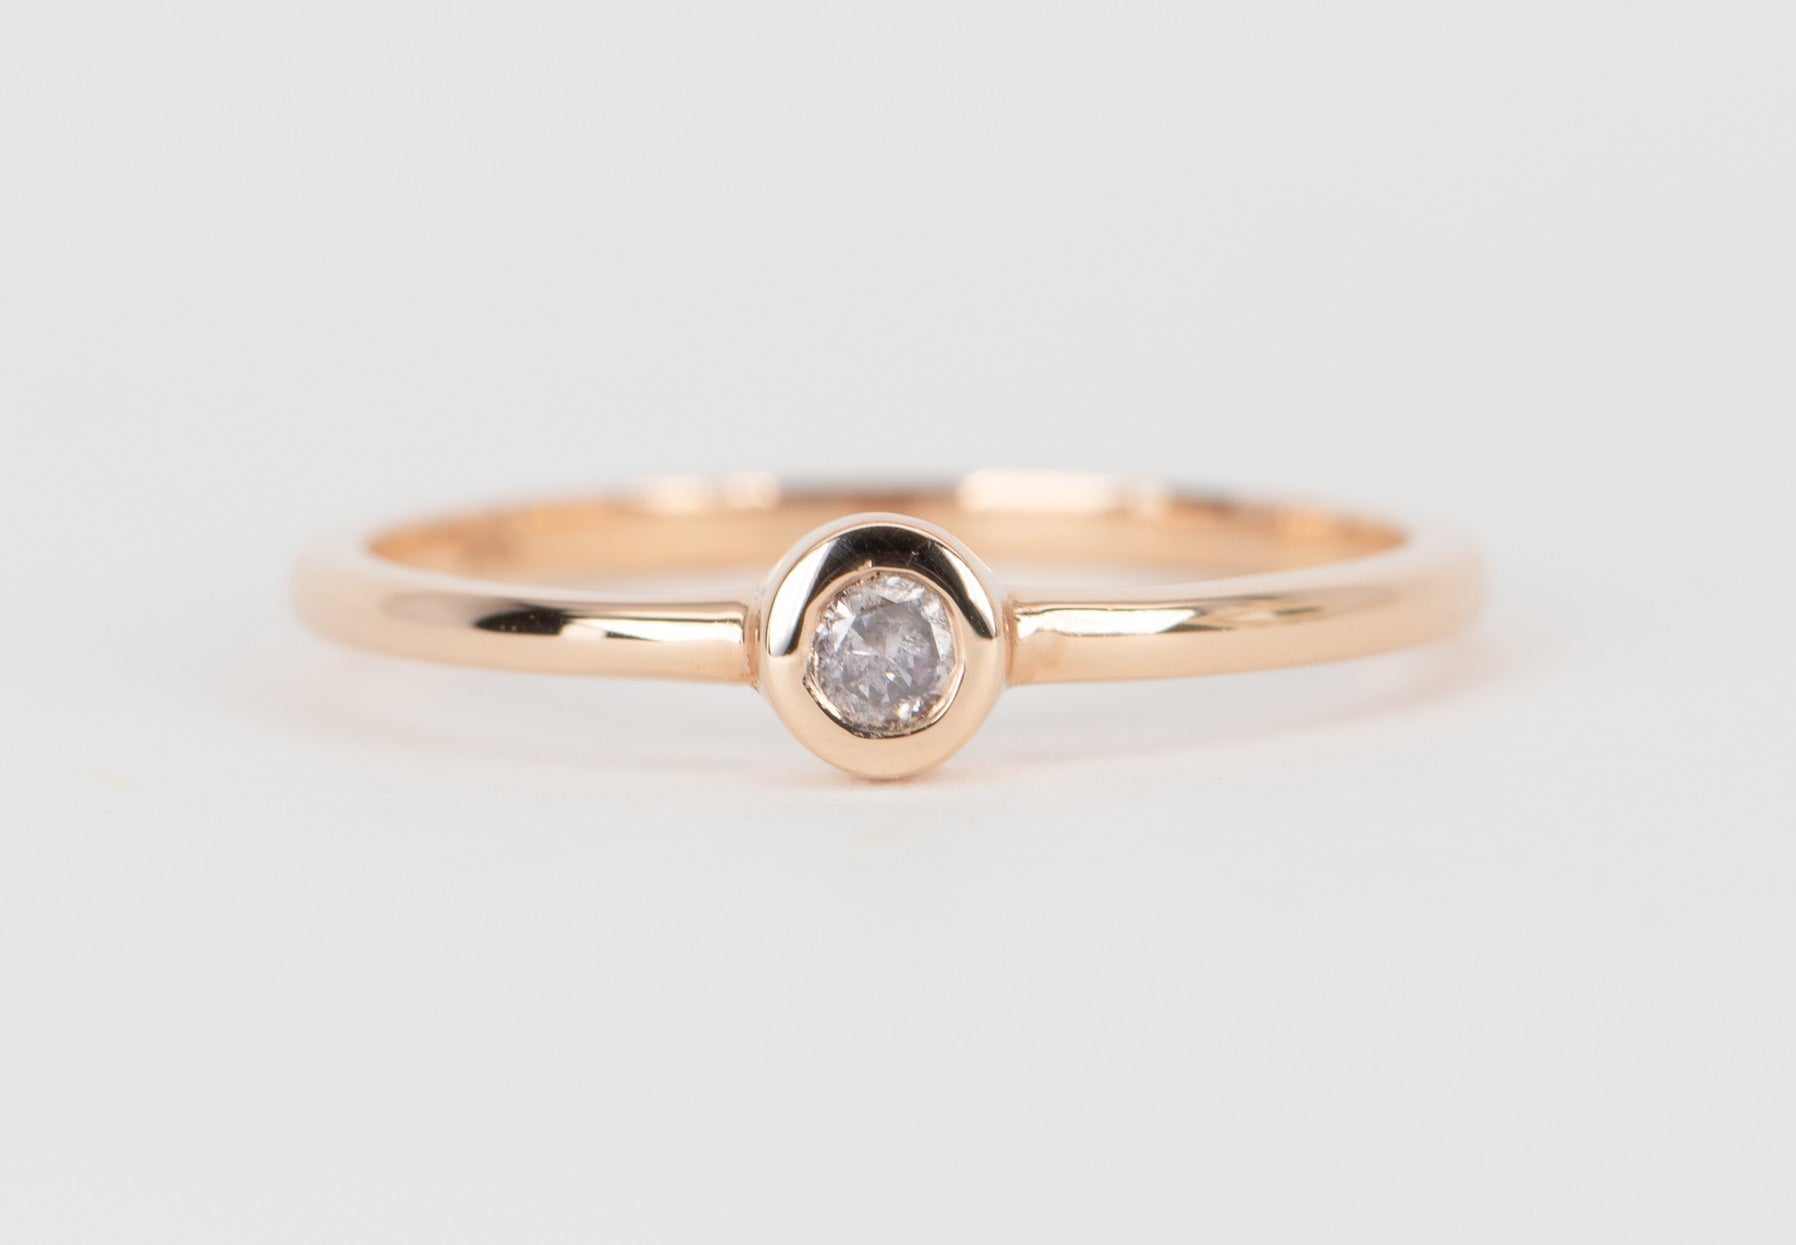 Natural Pink Diamond Ring (Sku R011)